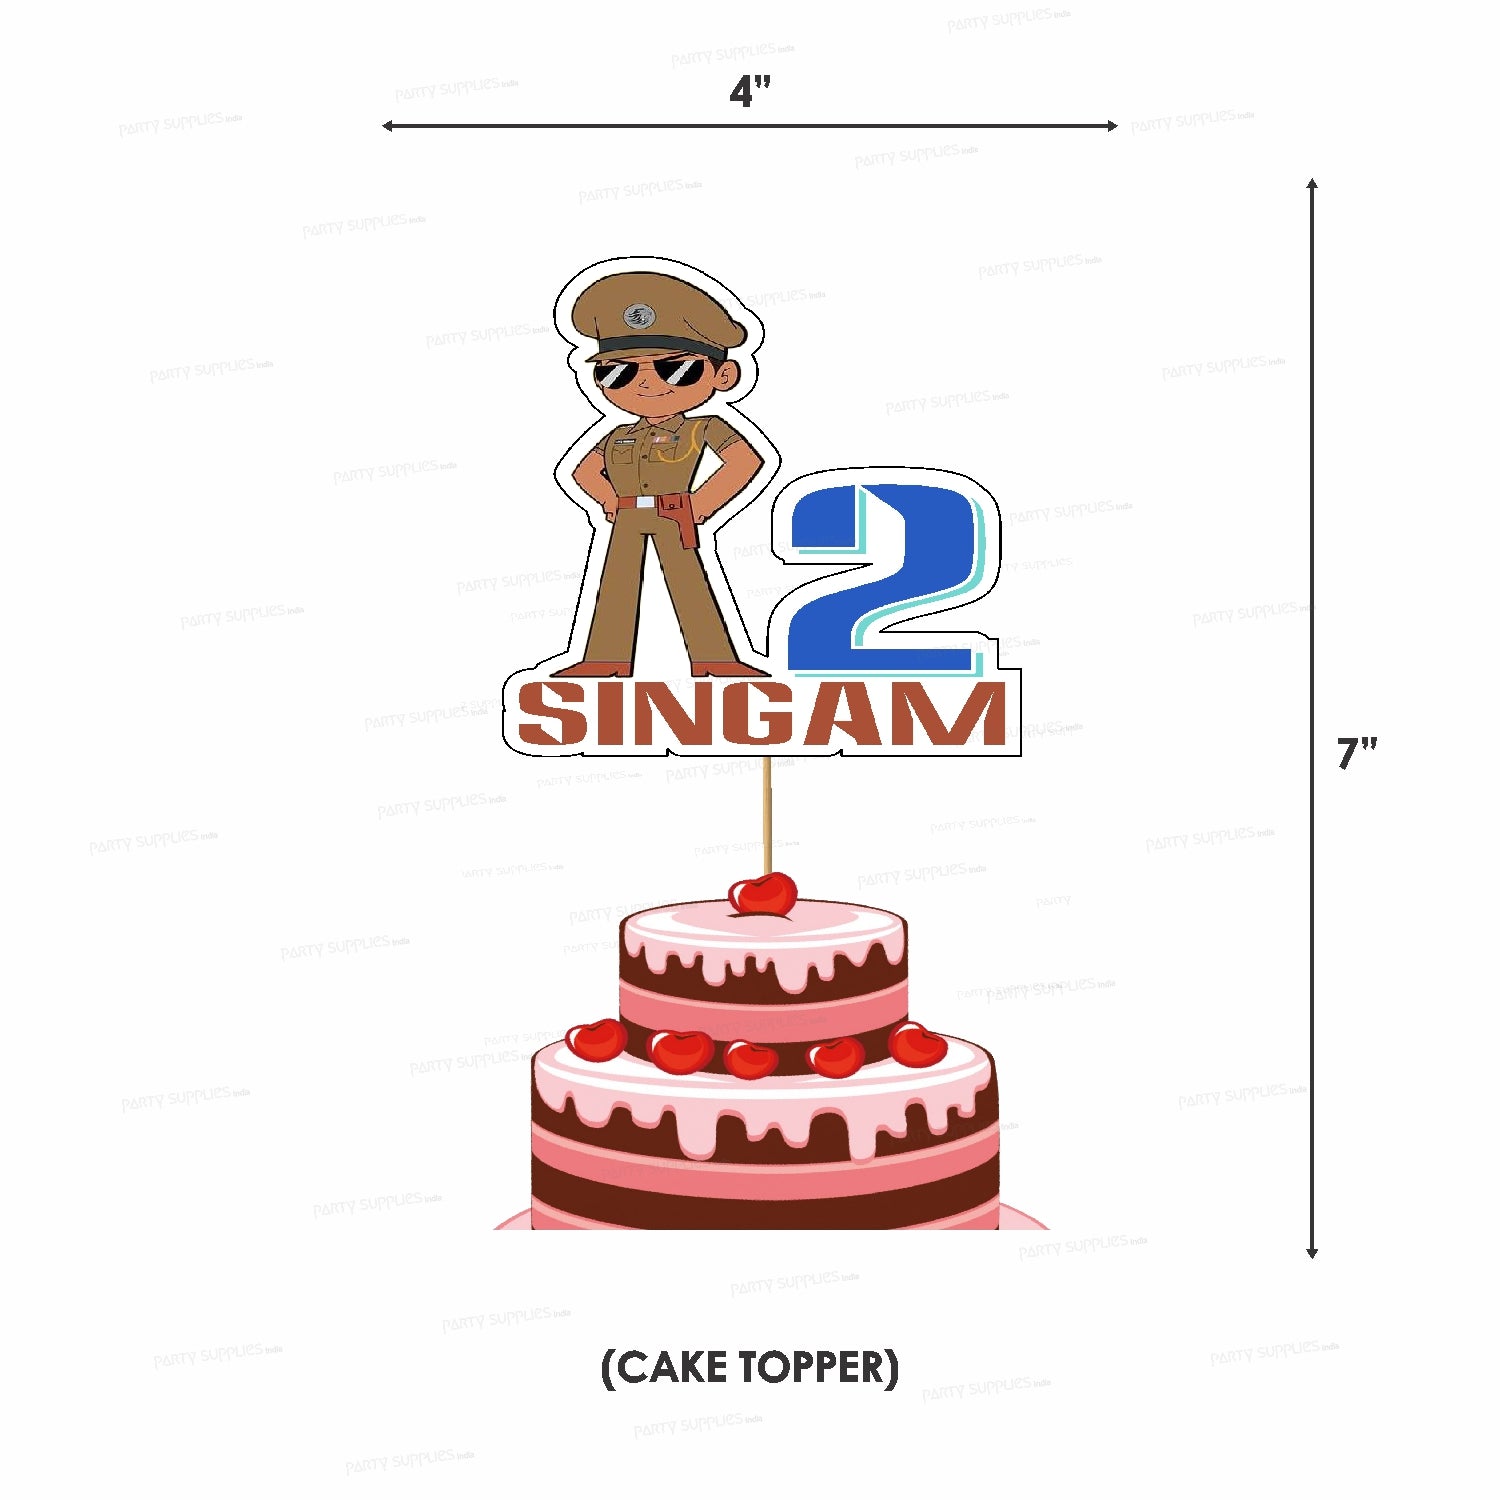 Little Singham theme cake | Minion birthday cake, Easy cake decorating,  Themed cakes